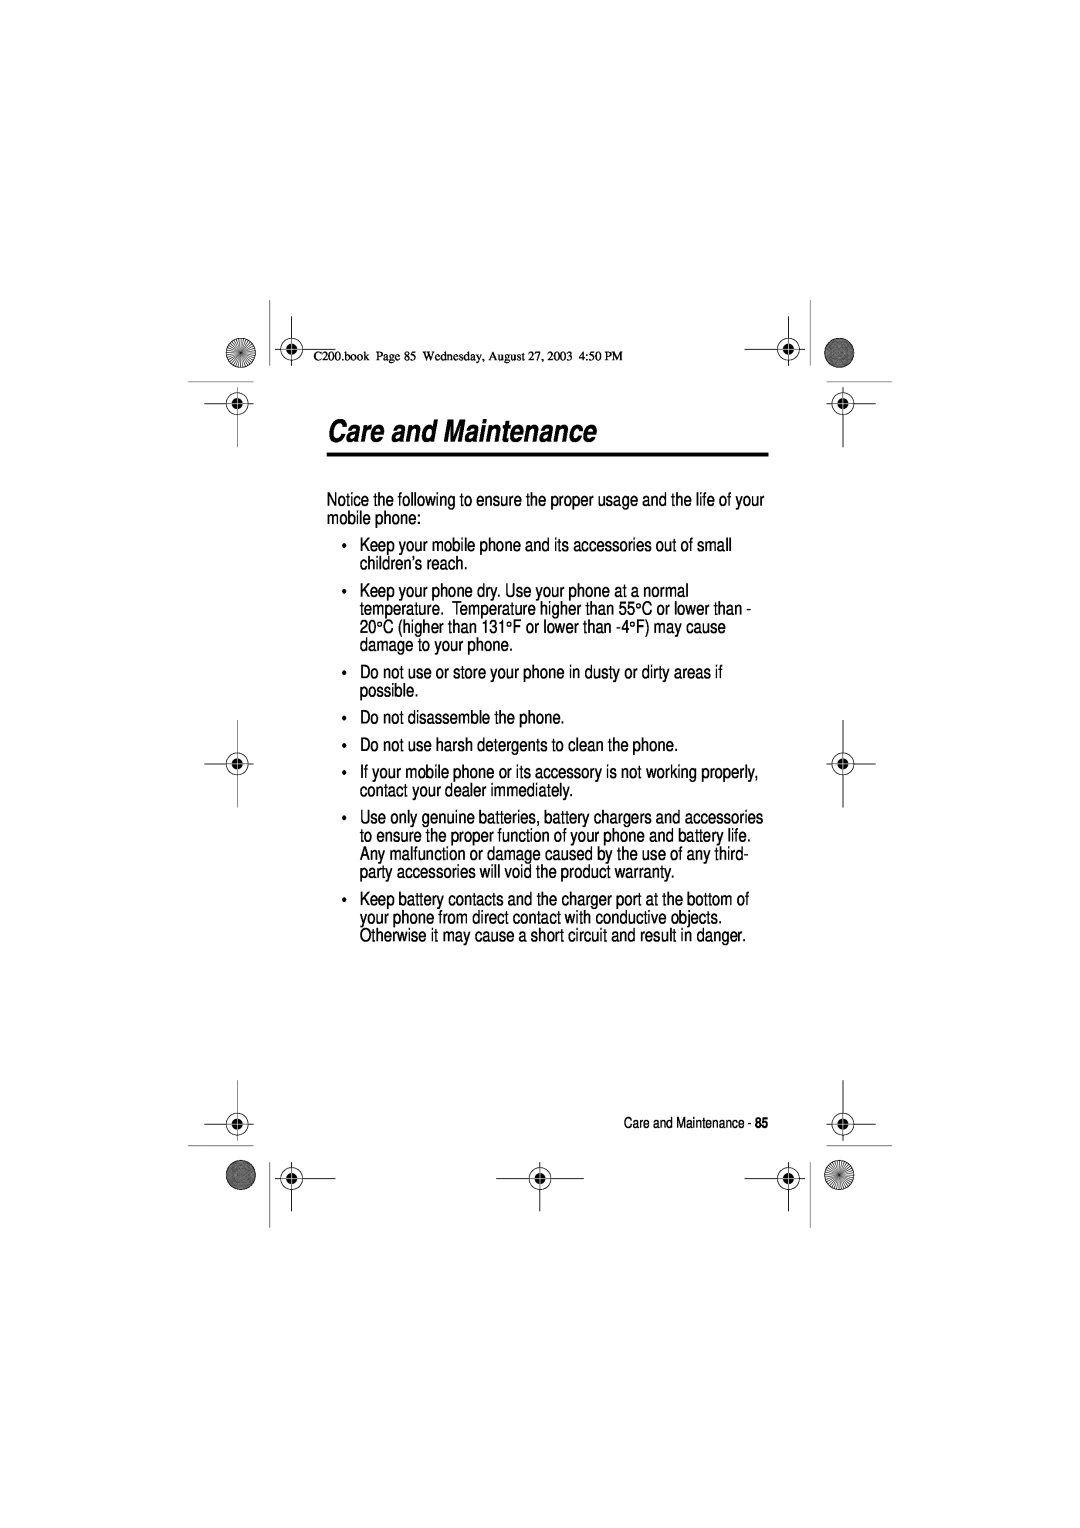 Motorola C200 manual Care and Maintenance 